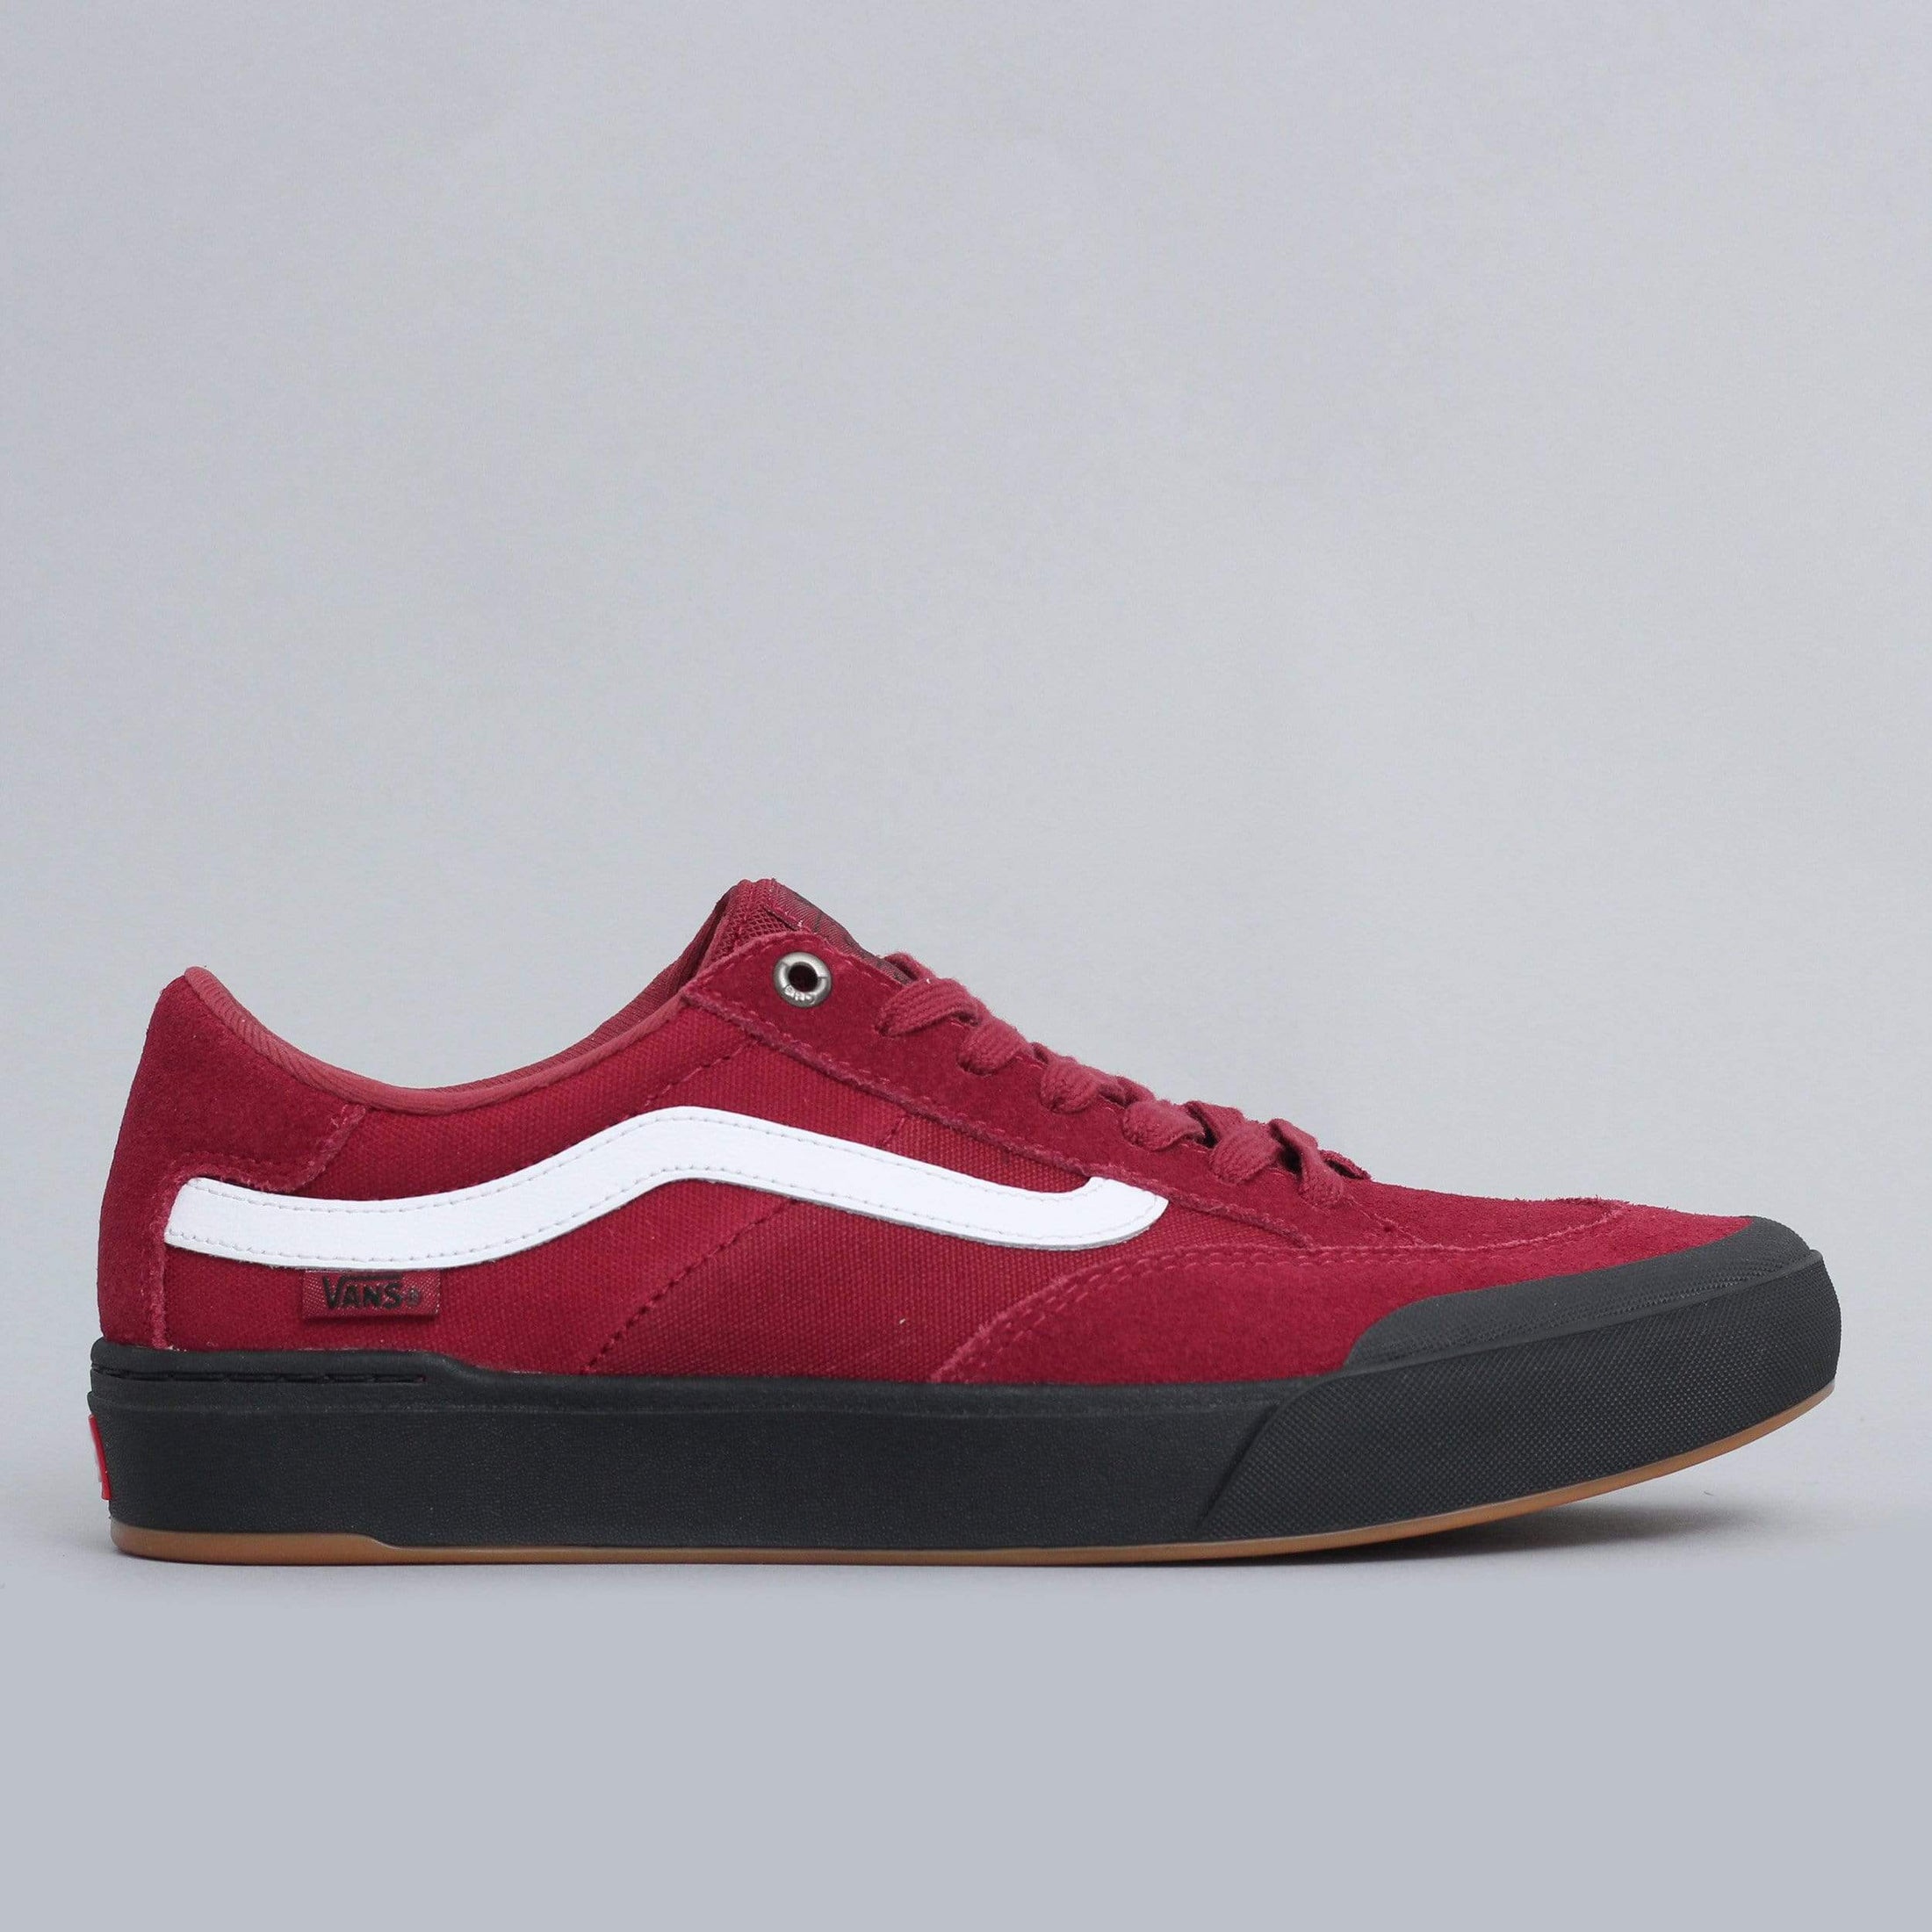 Vans Berle Pro Shoes Rumba Red